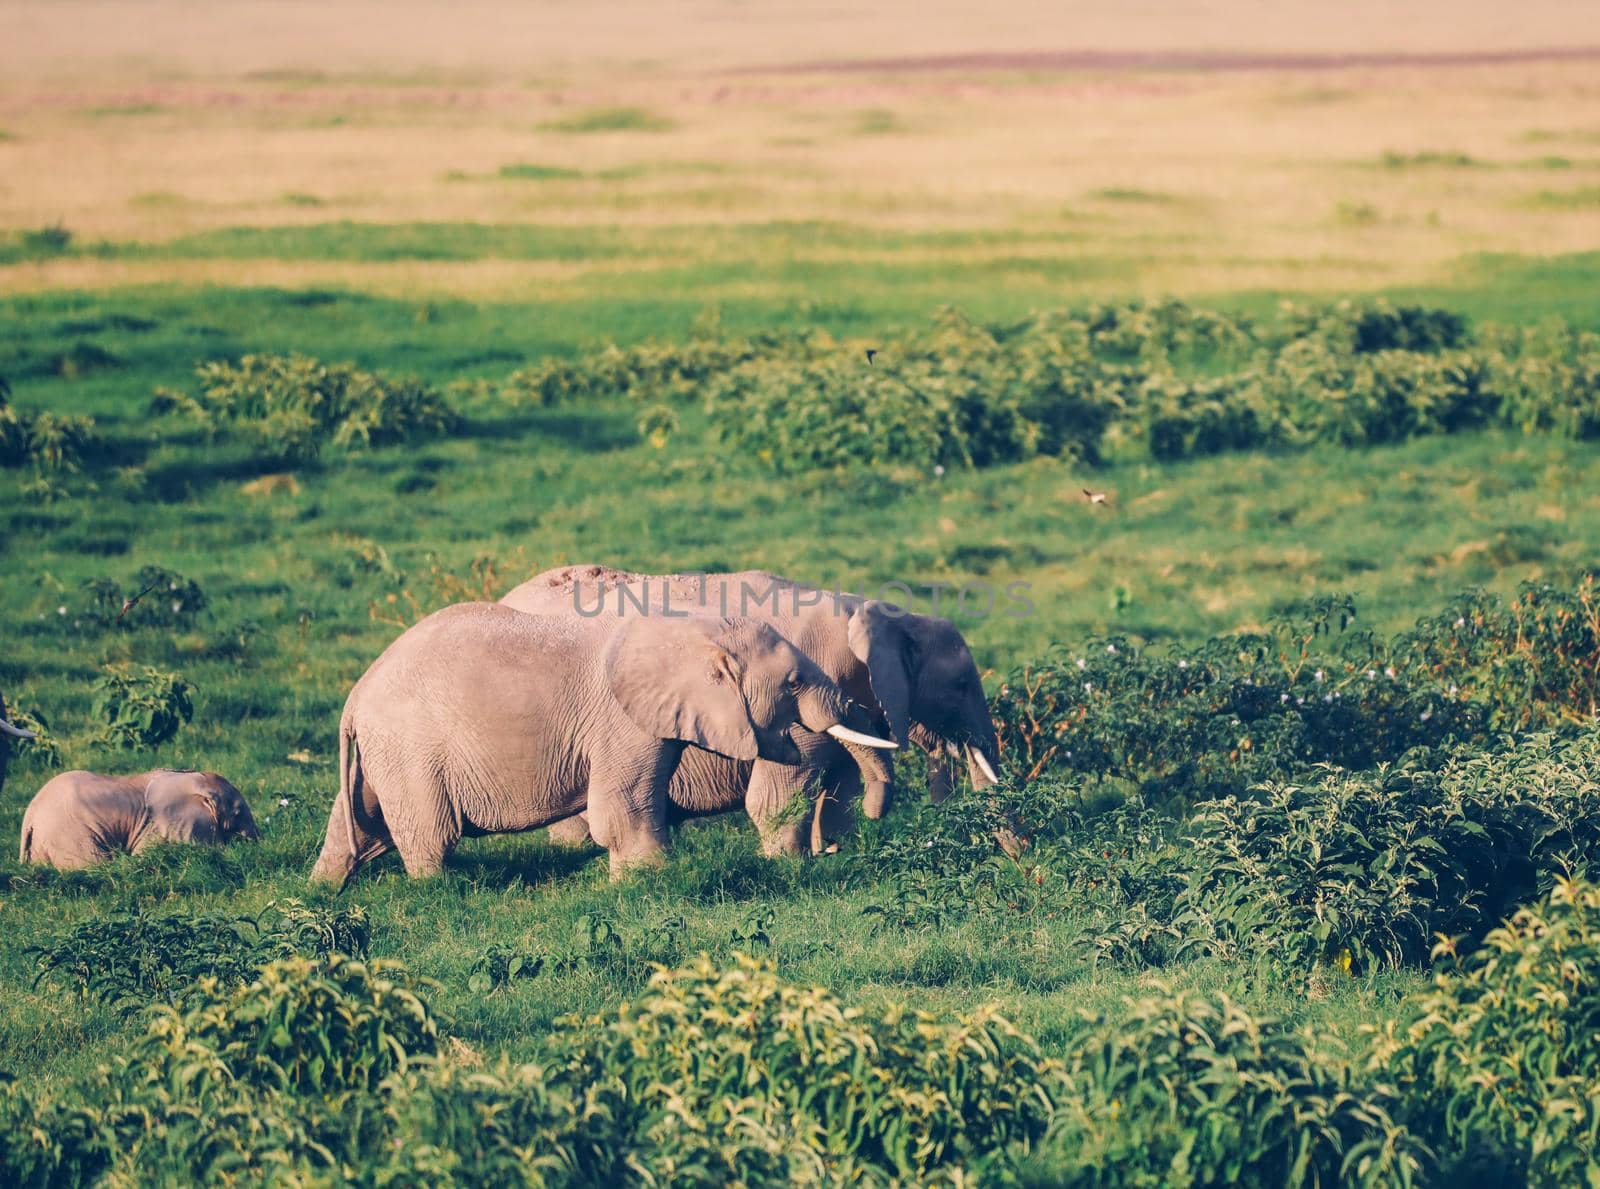 Elephants in Amboseli Nationalpark, Kenya, Africa 